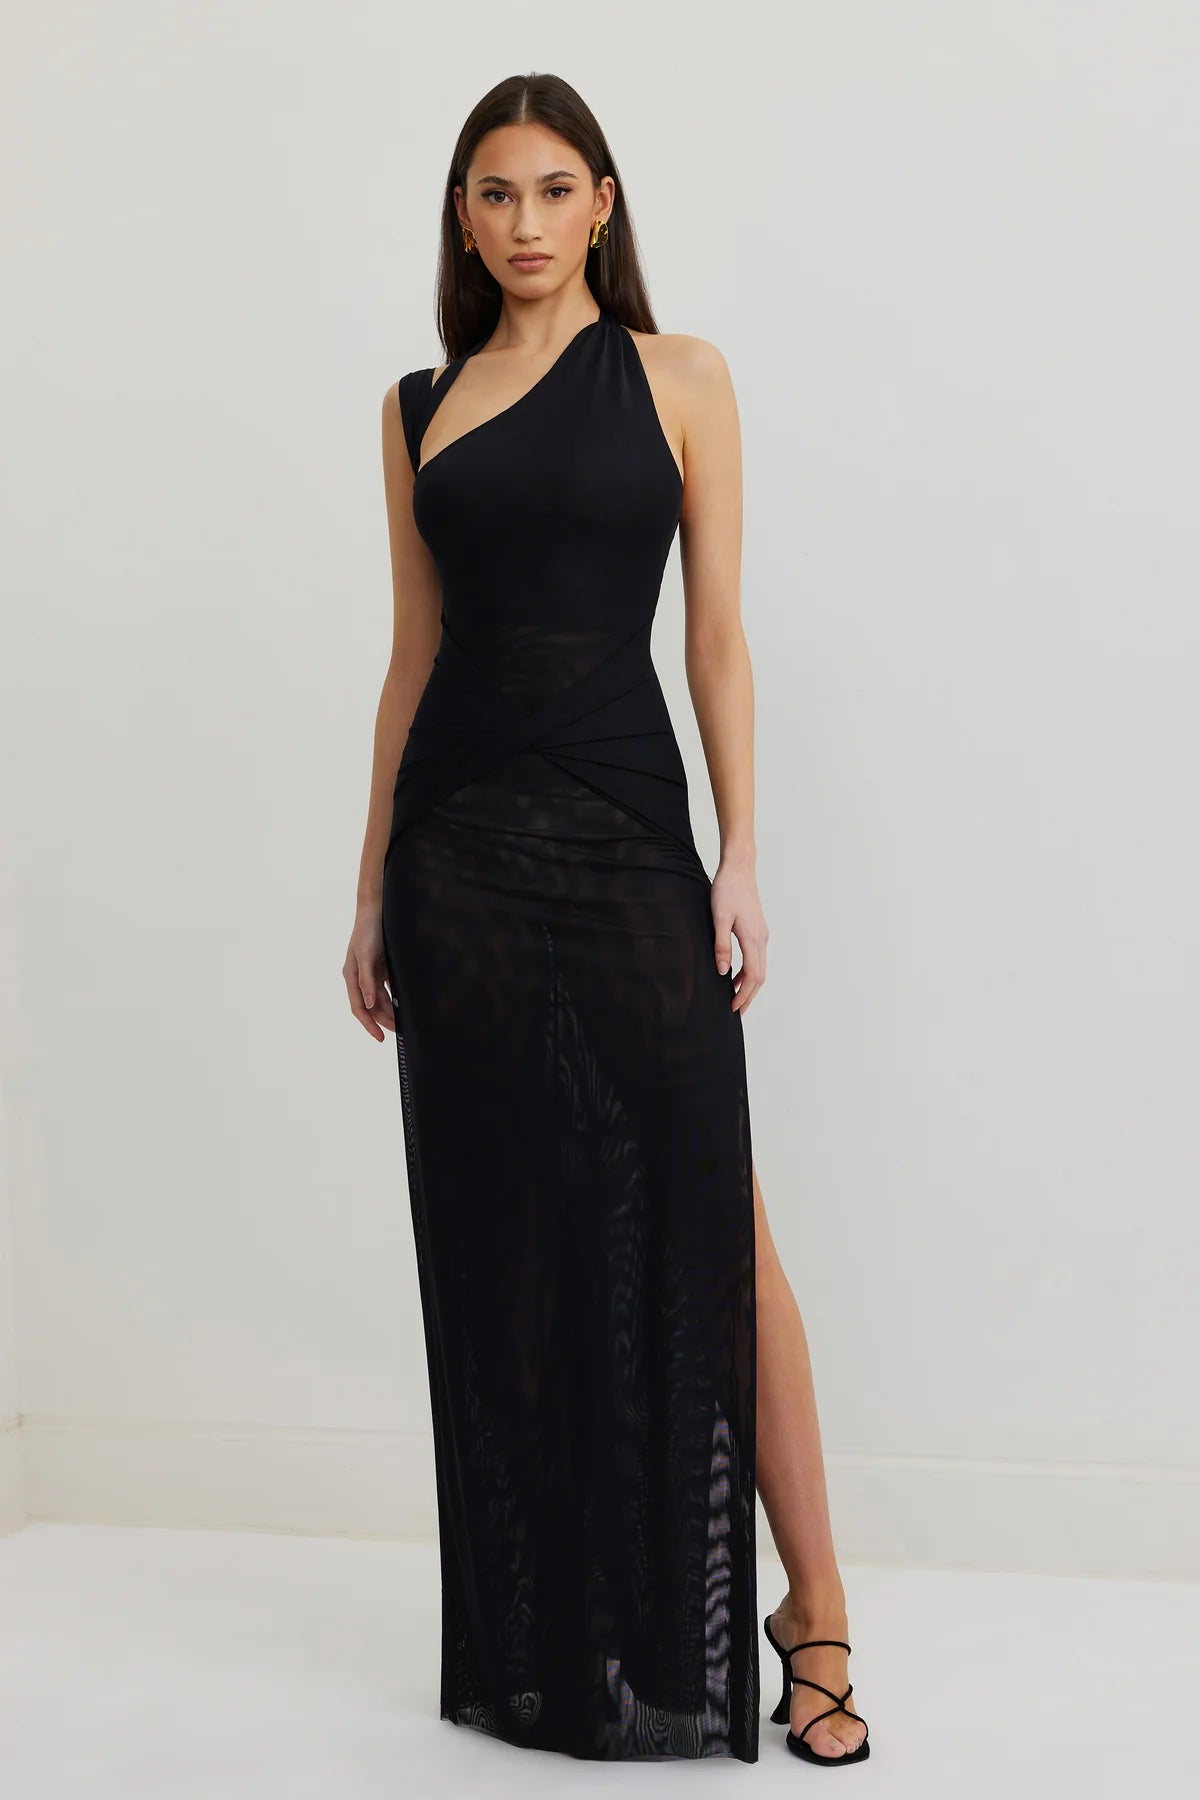 Lexi - Mirage Dress - Black